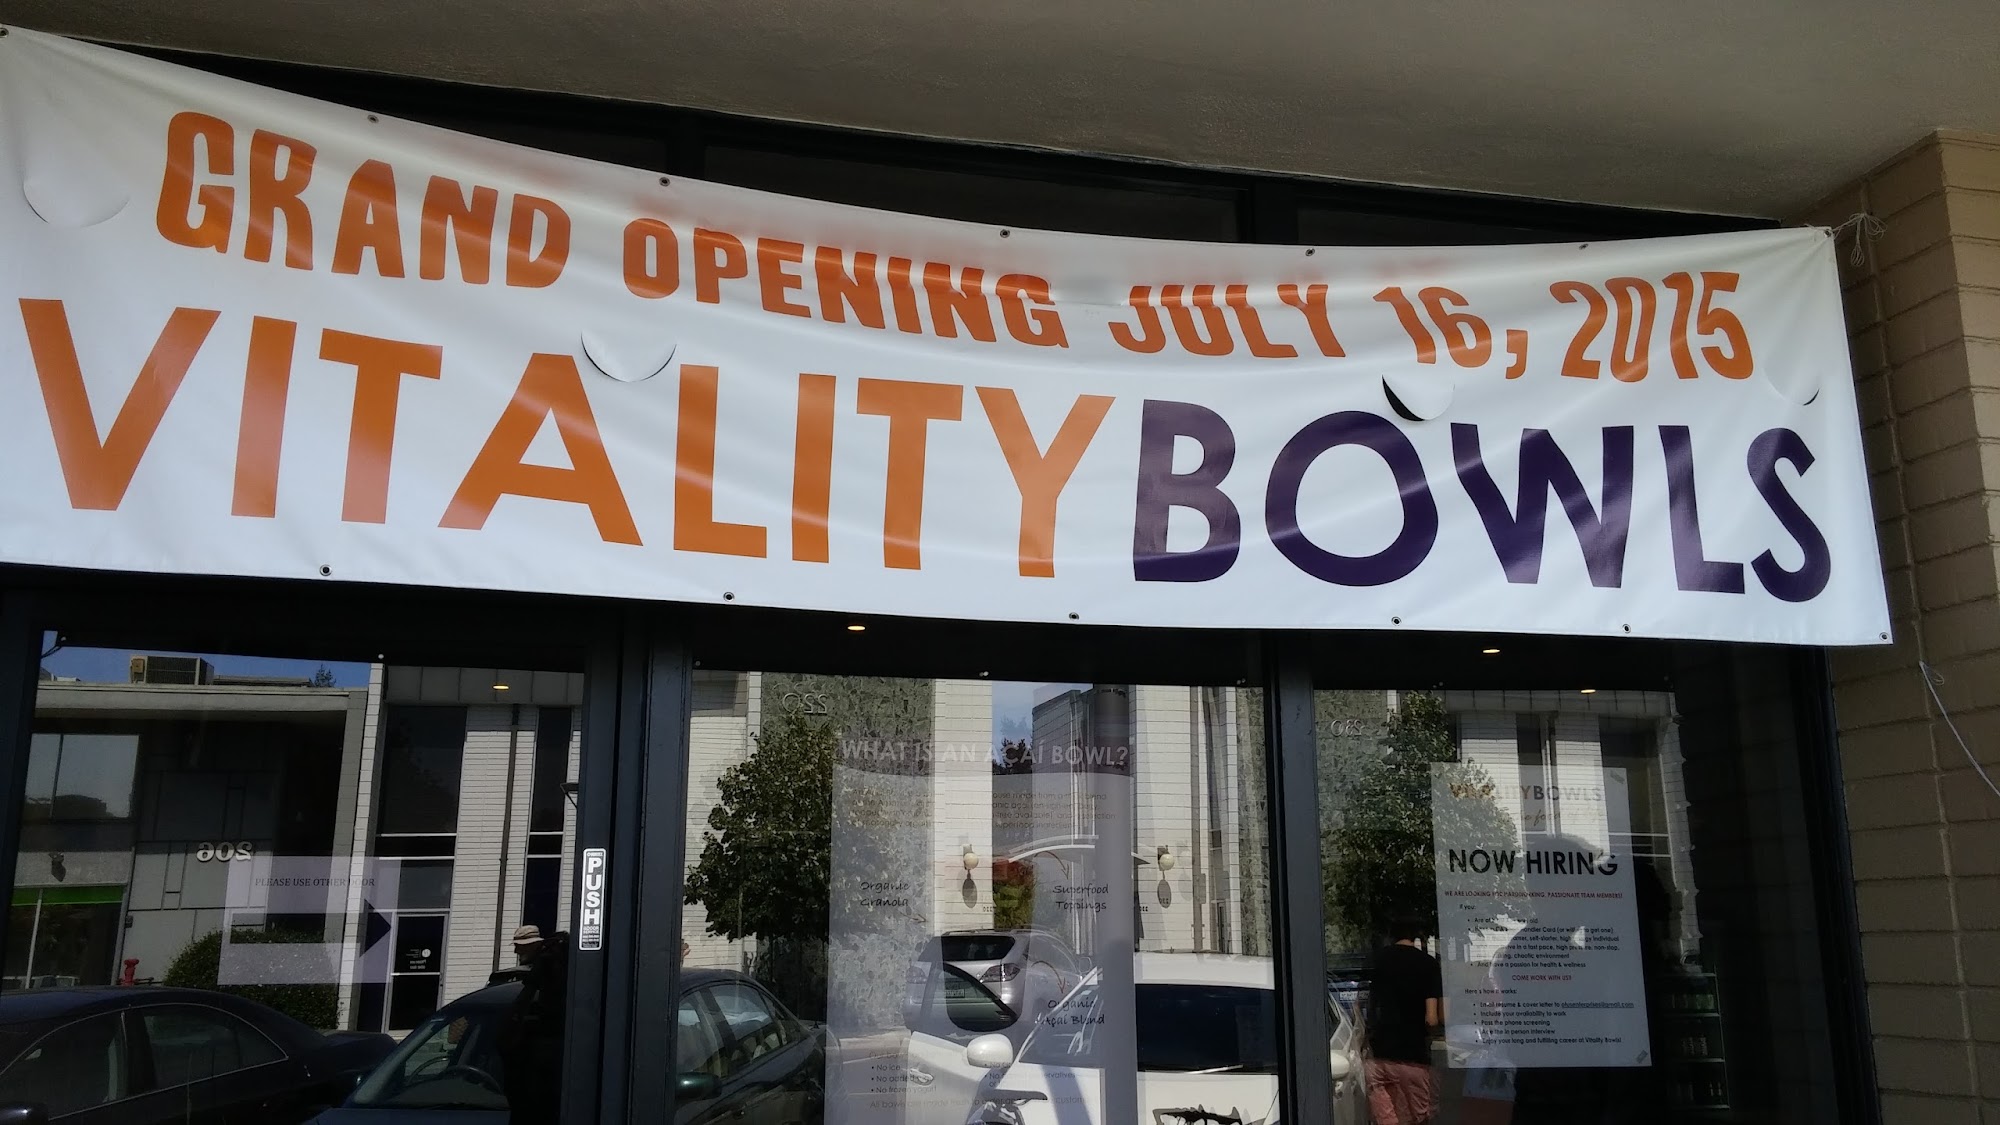 Vitality Bowls Palo Alto